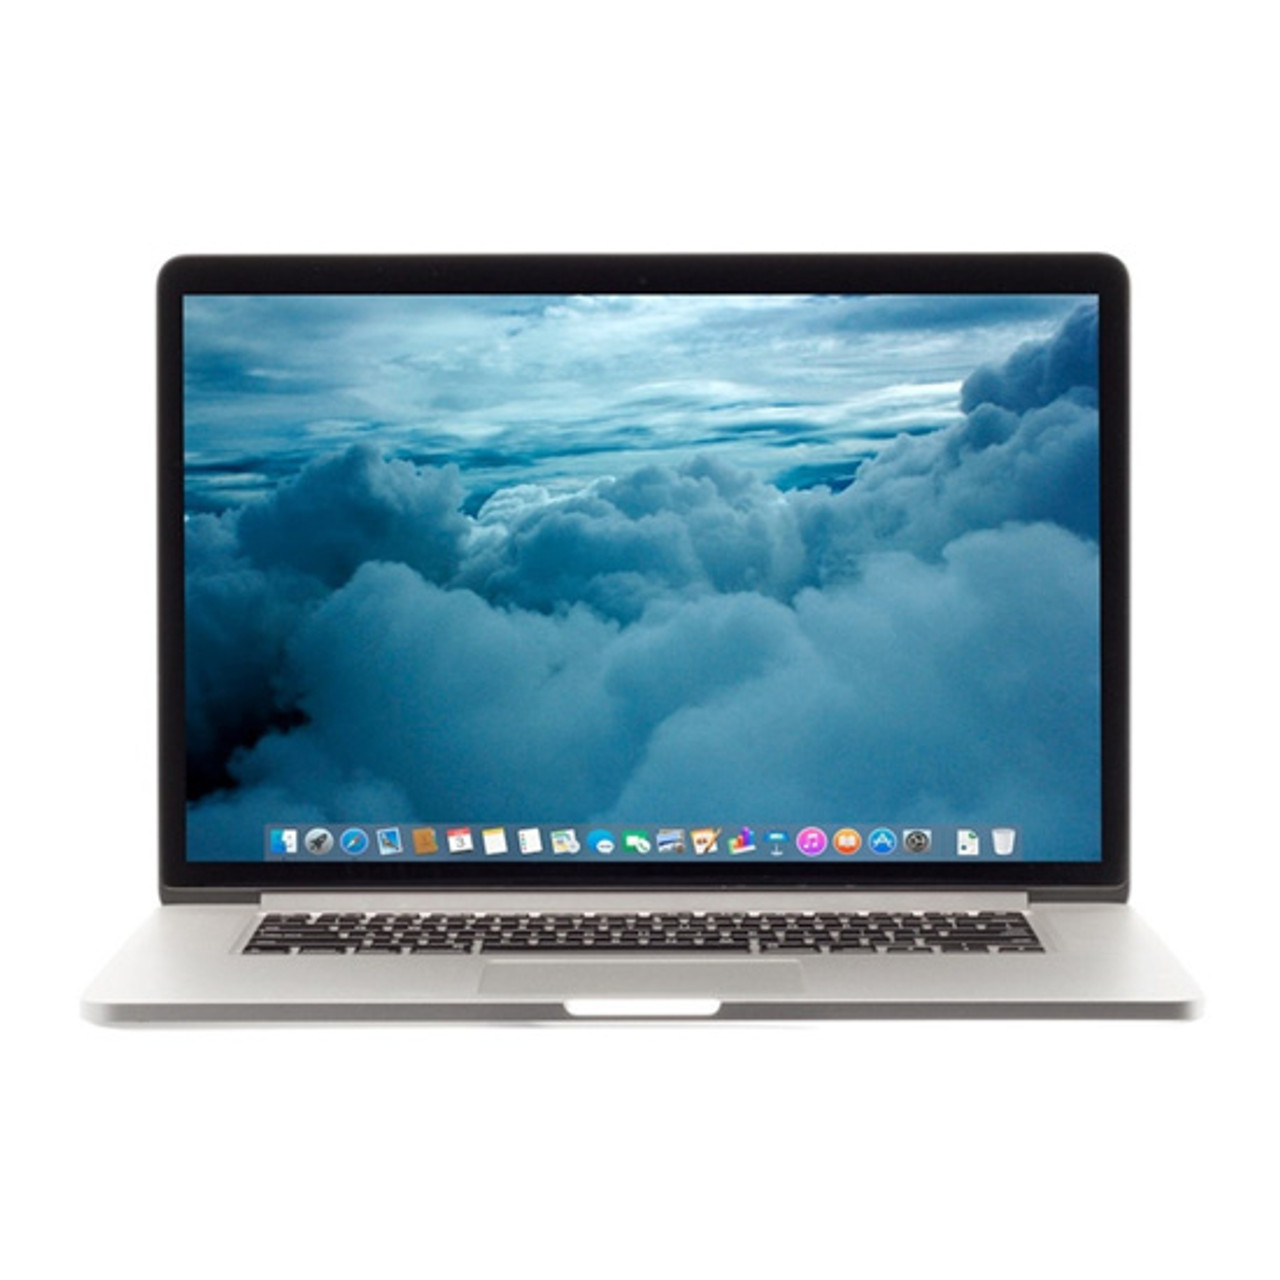 iSight*: Apple MacBook Pro 15-inch 2.2GHz Quad-core i7 (Retina